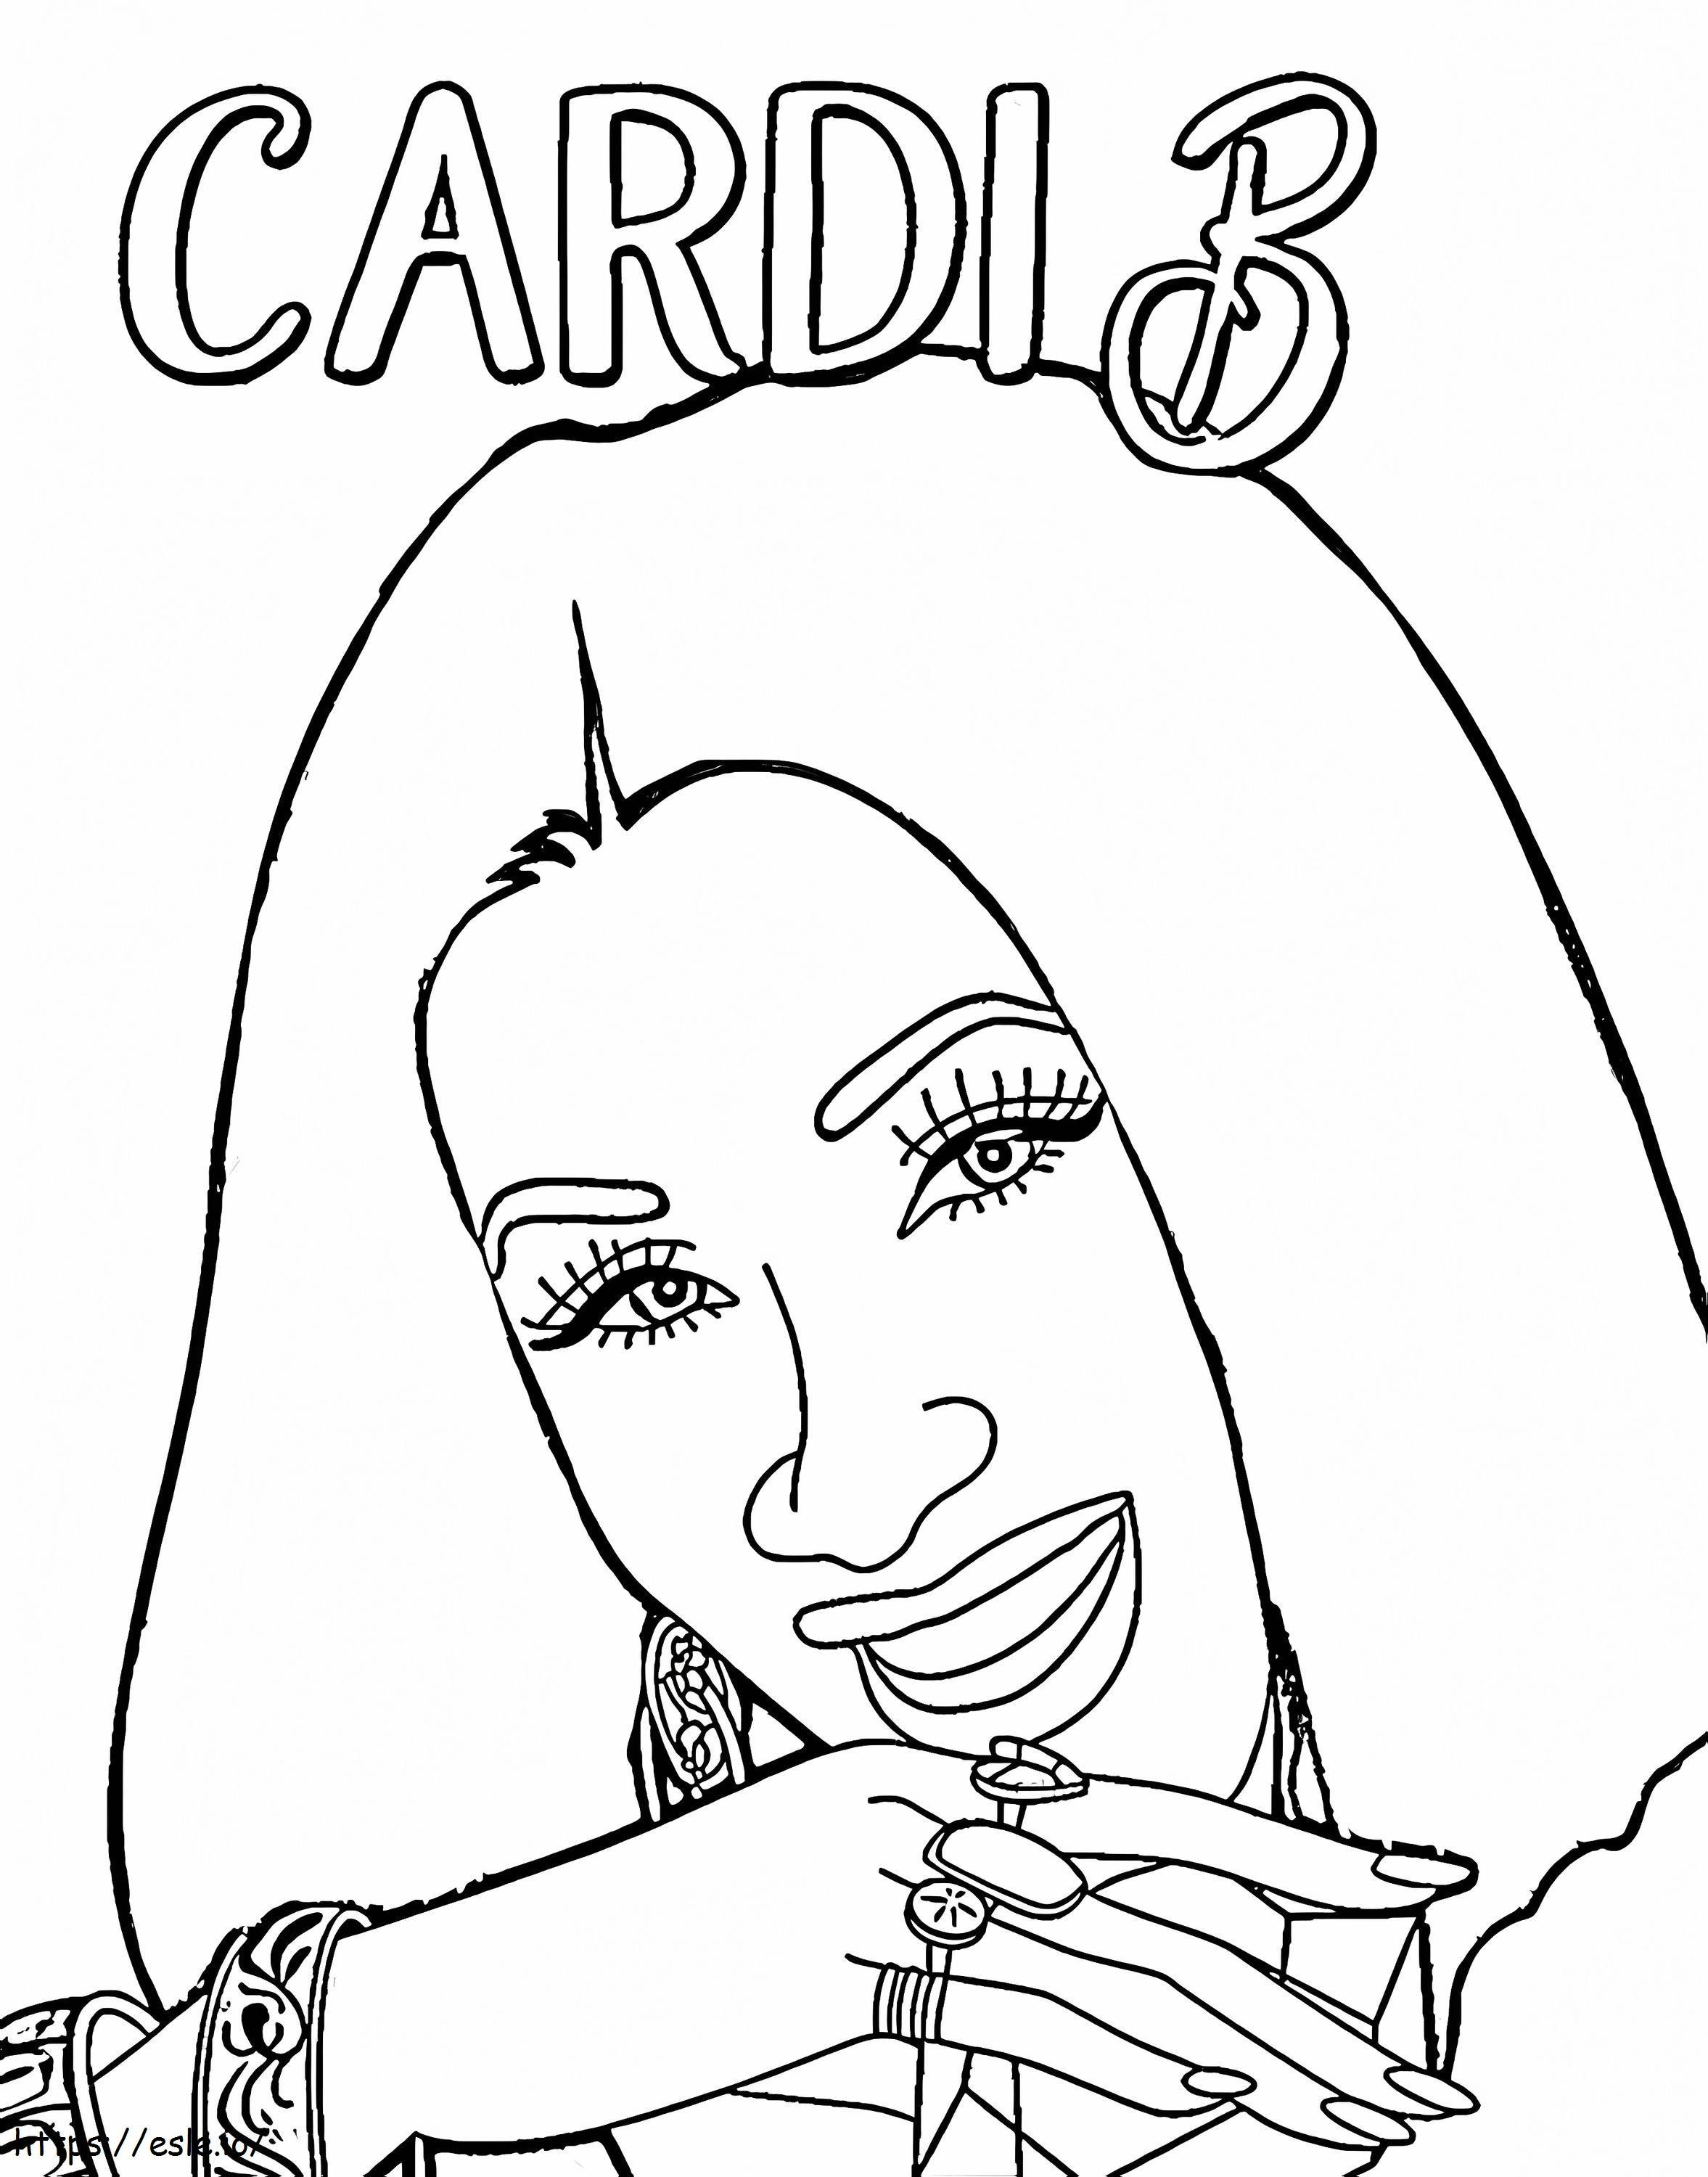 Cardi B Smiling coloring page